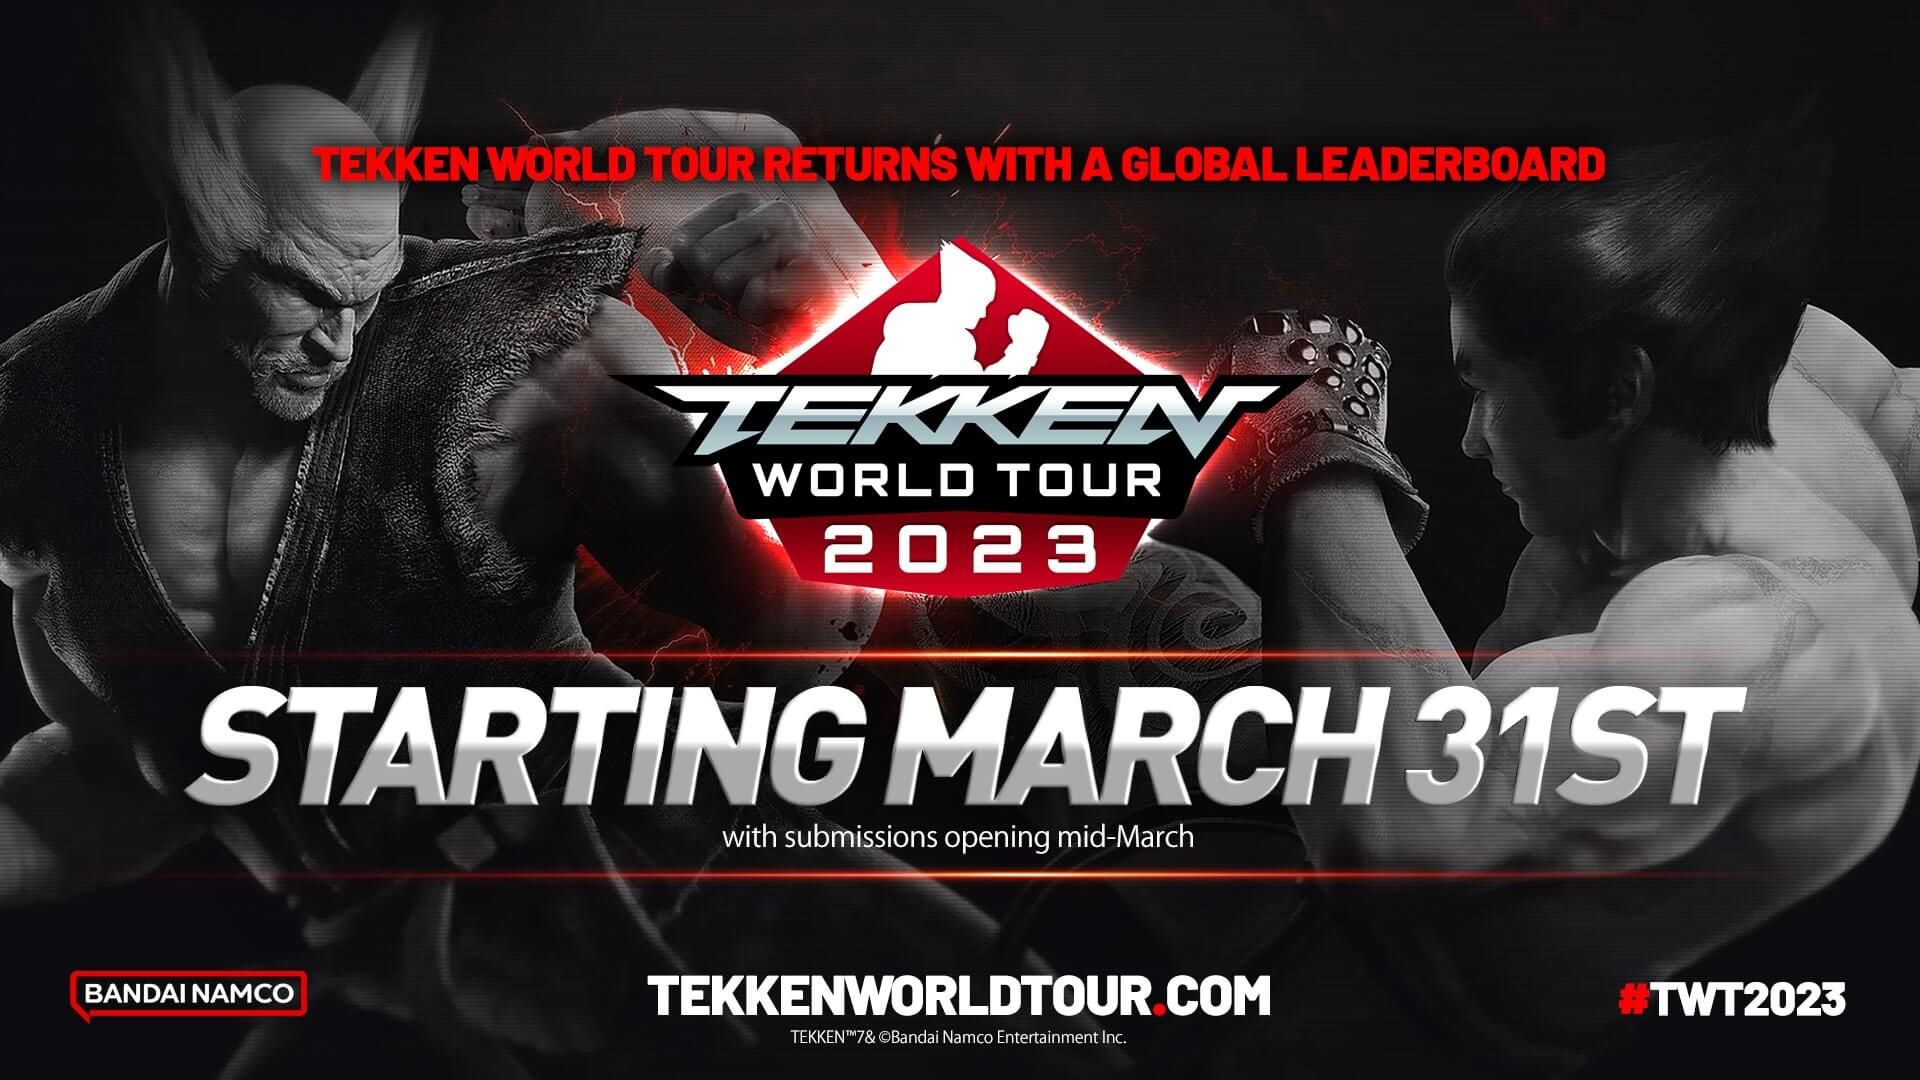 Tekken World Tour 2023 Starting March 31st